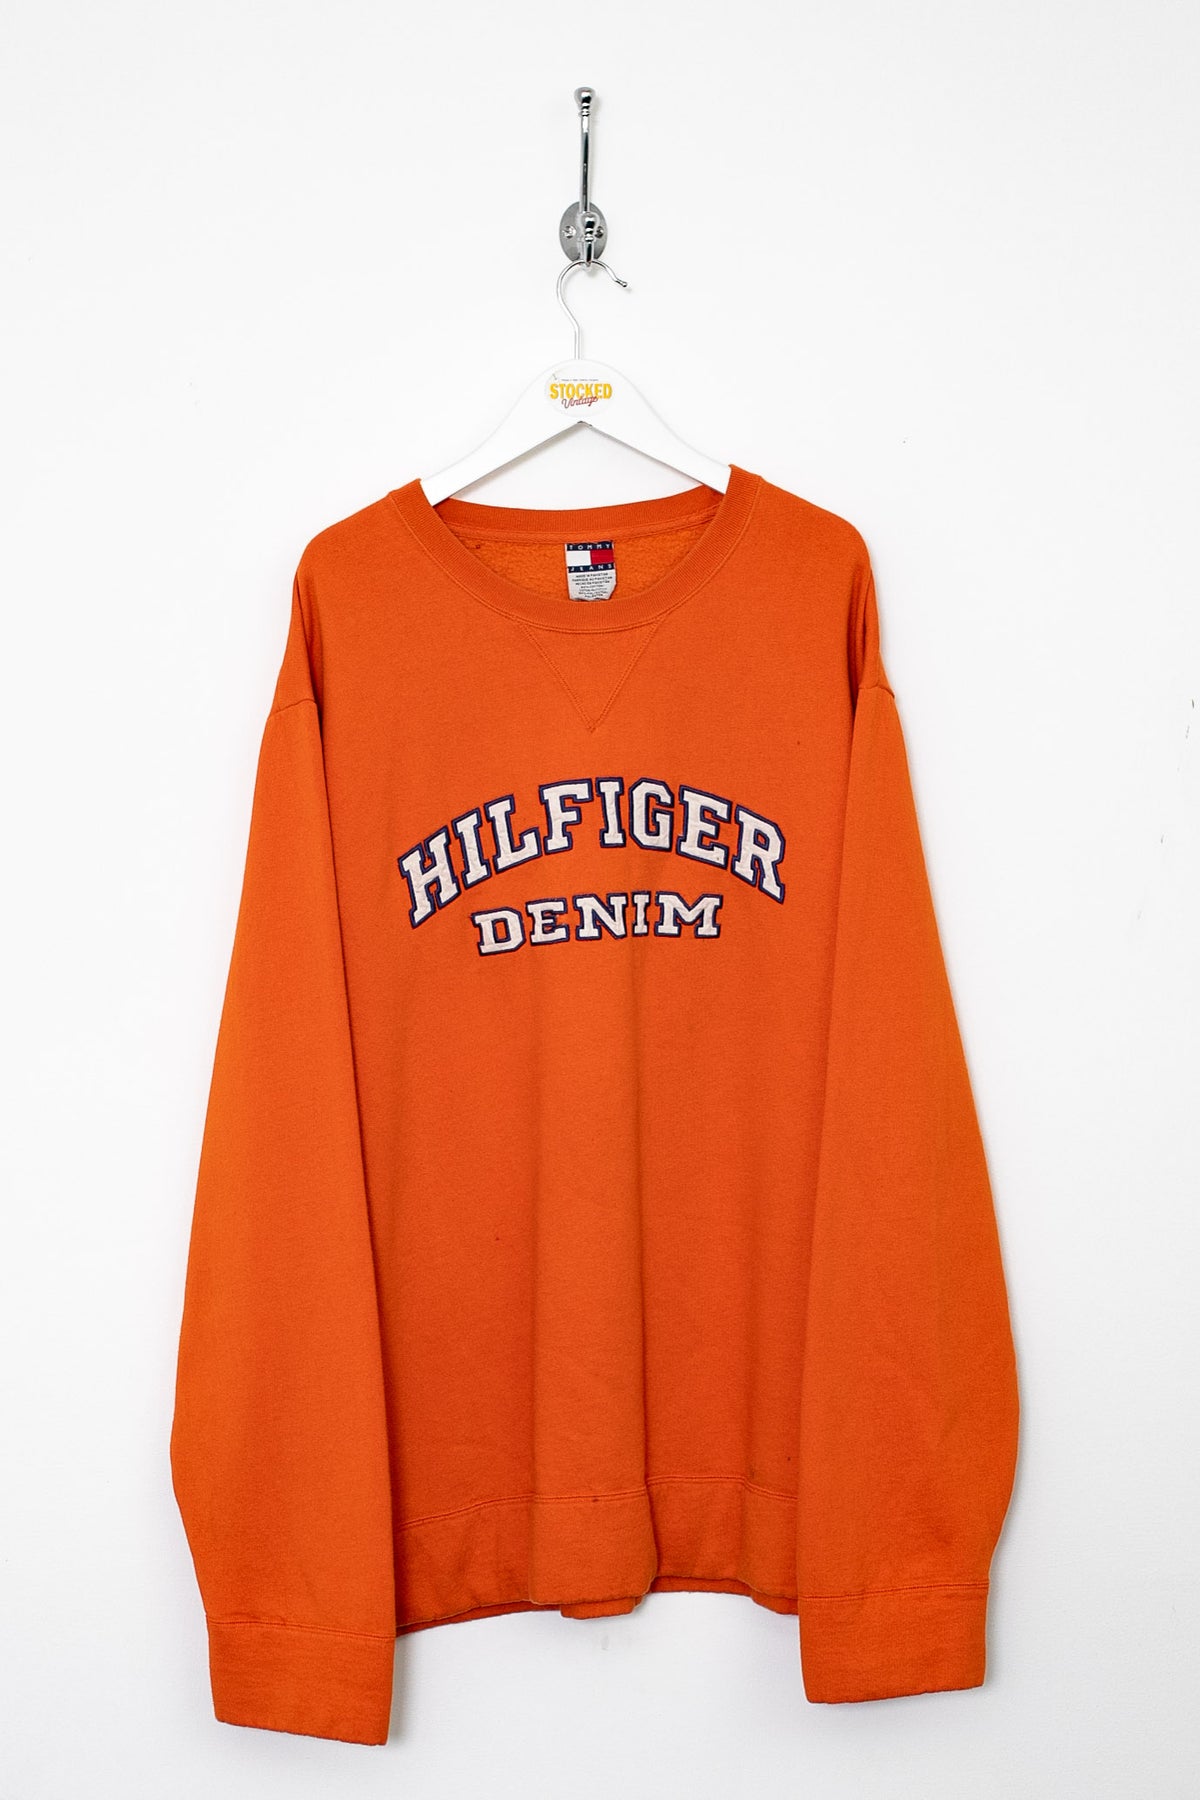 90s Tommy Hilfiger Sweatshirt (XL)